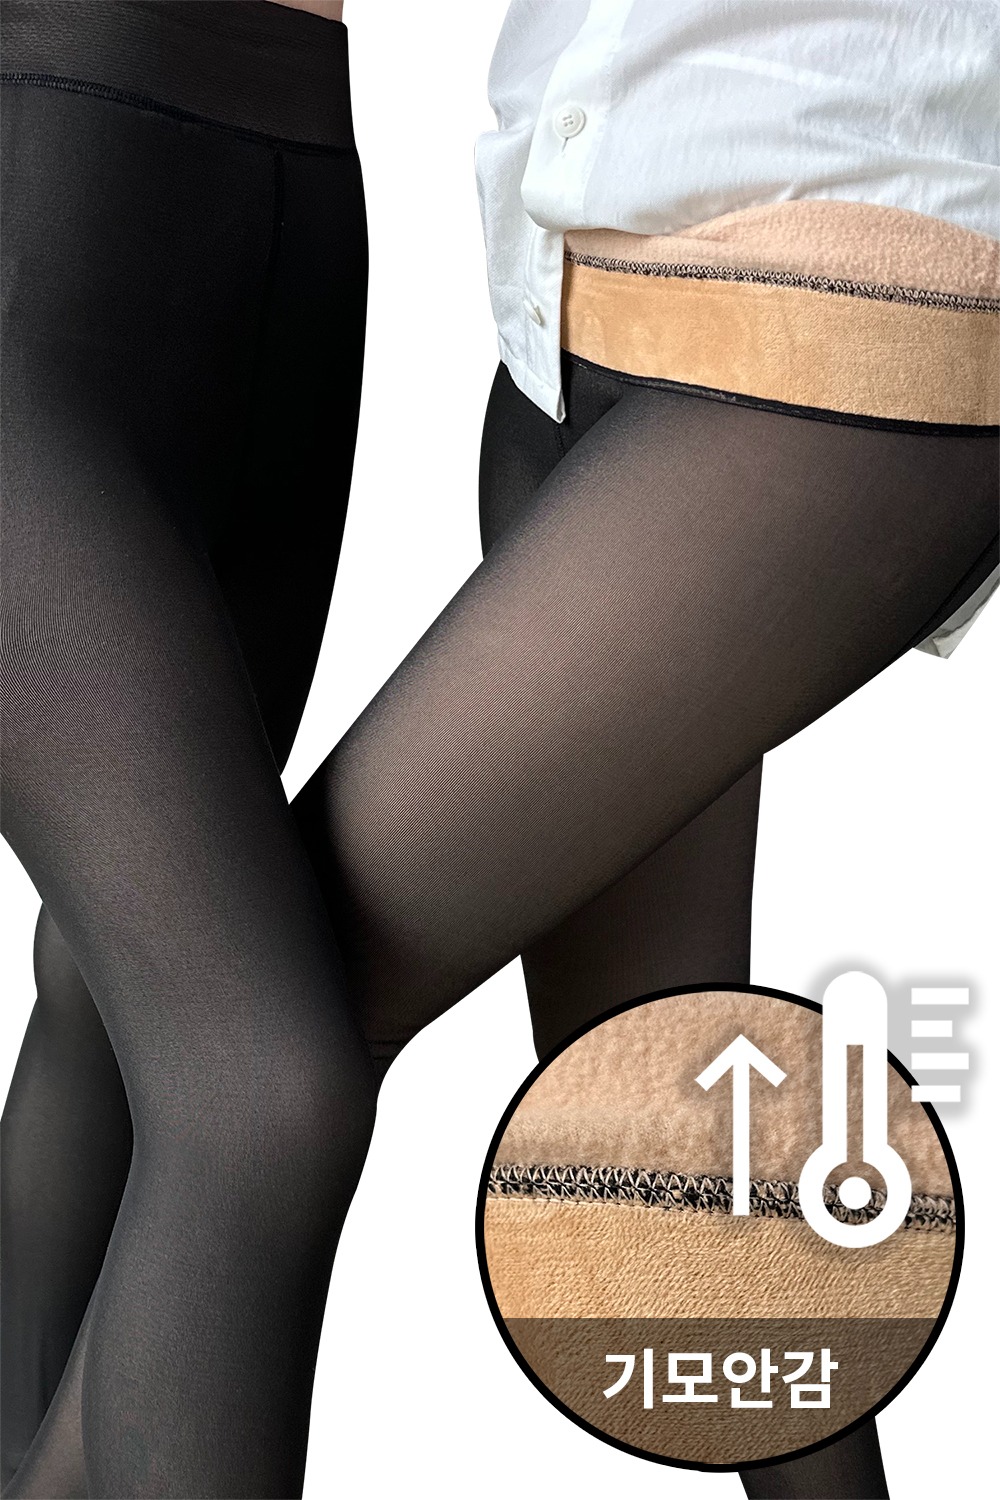 [Matching]Illusion Fleece-lined Stockings Best Item